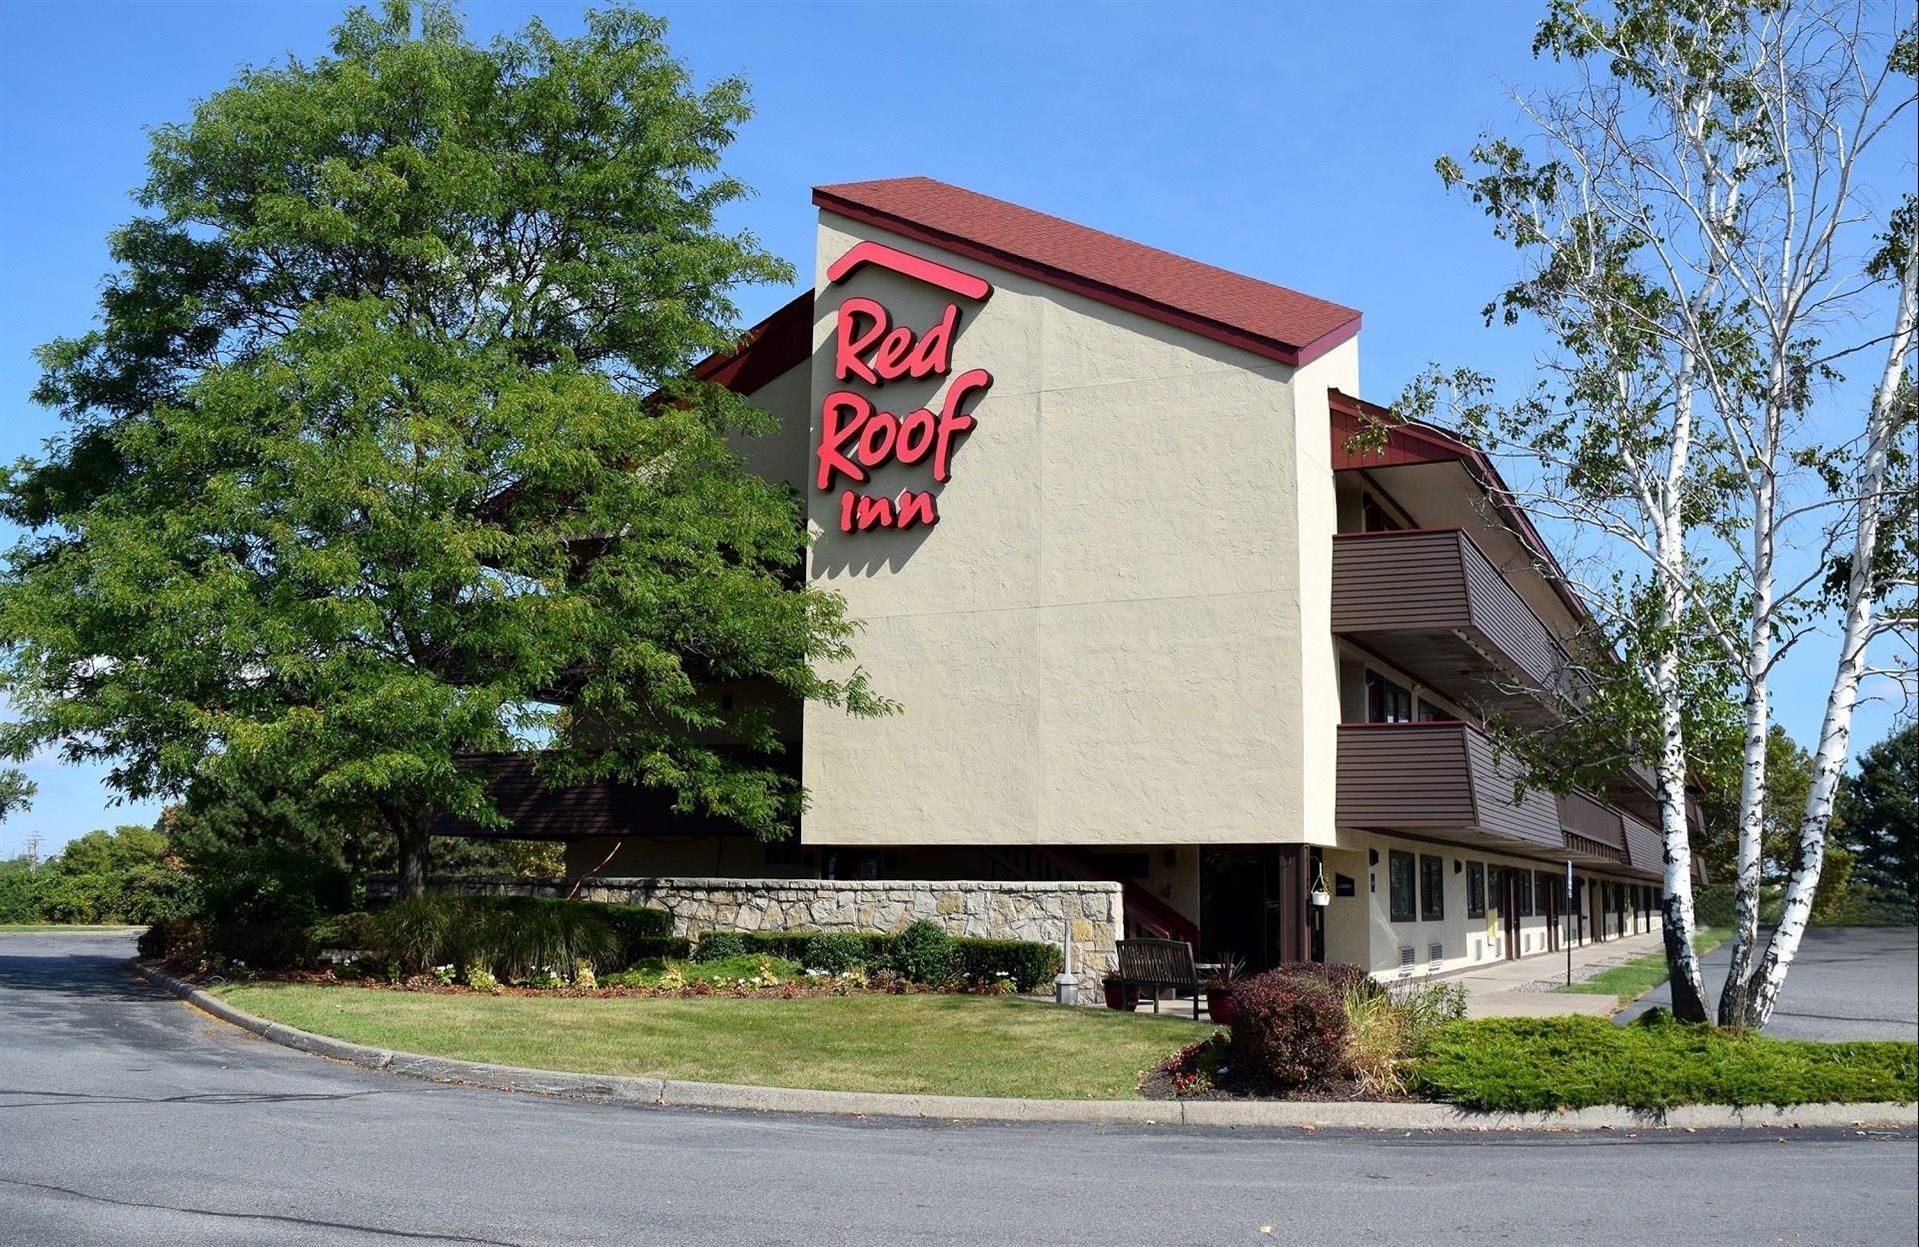 Red Roof Inn Syracuse in Syracuse, NY